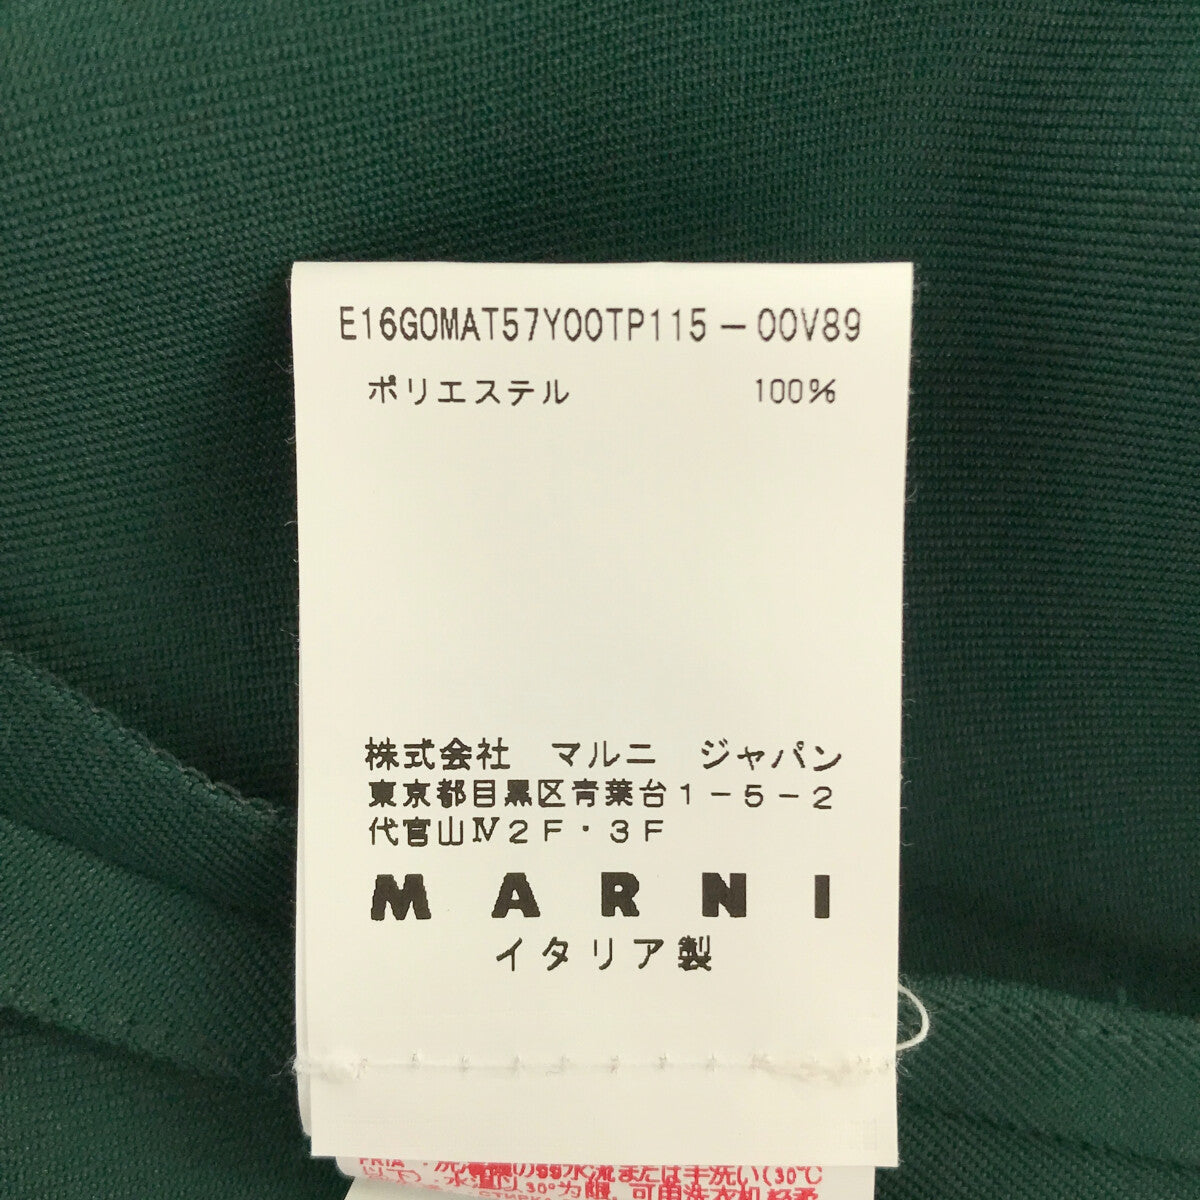 MARNI / マルニ | カットオフ アシンメトリー スリット サイドジップスカート | 40 | レディース